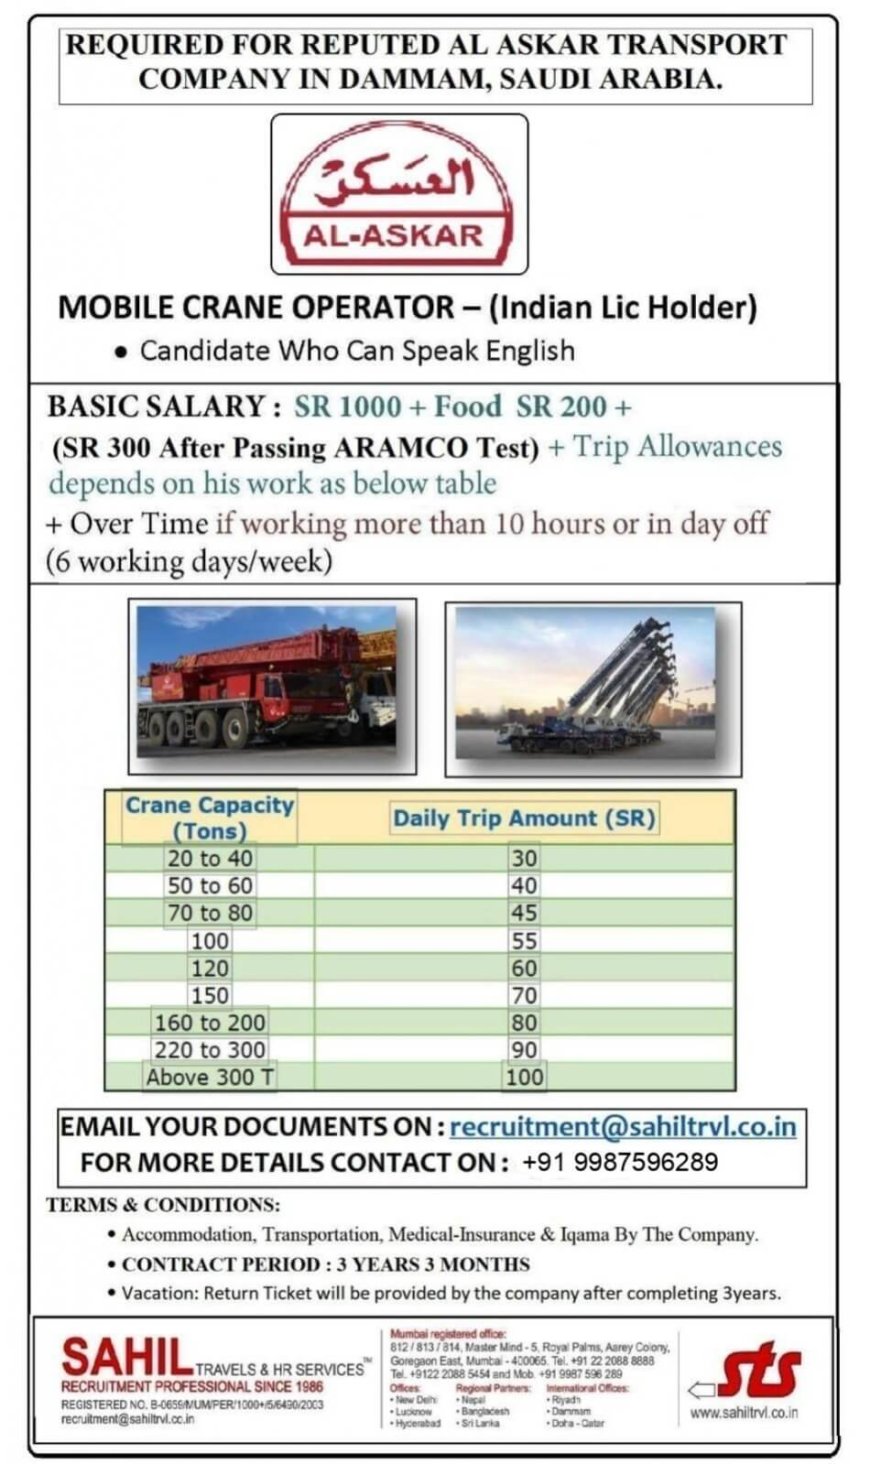 Mobile Crane Operator for Reputed Al Askar Transport Company in Dammam, Saudi Arabia